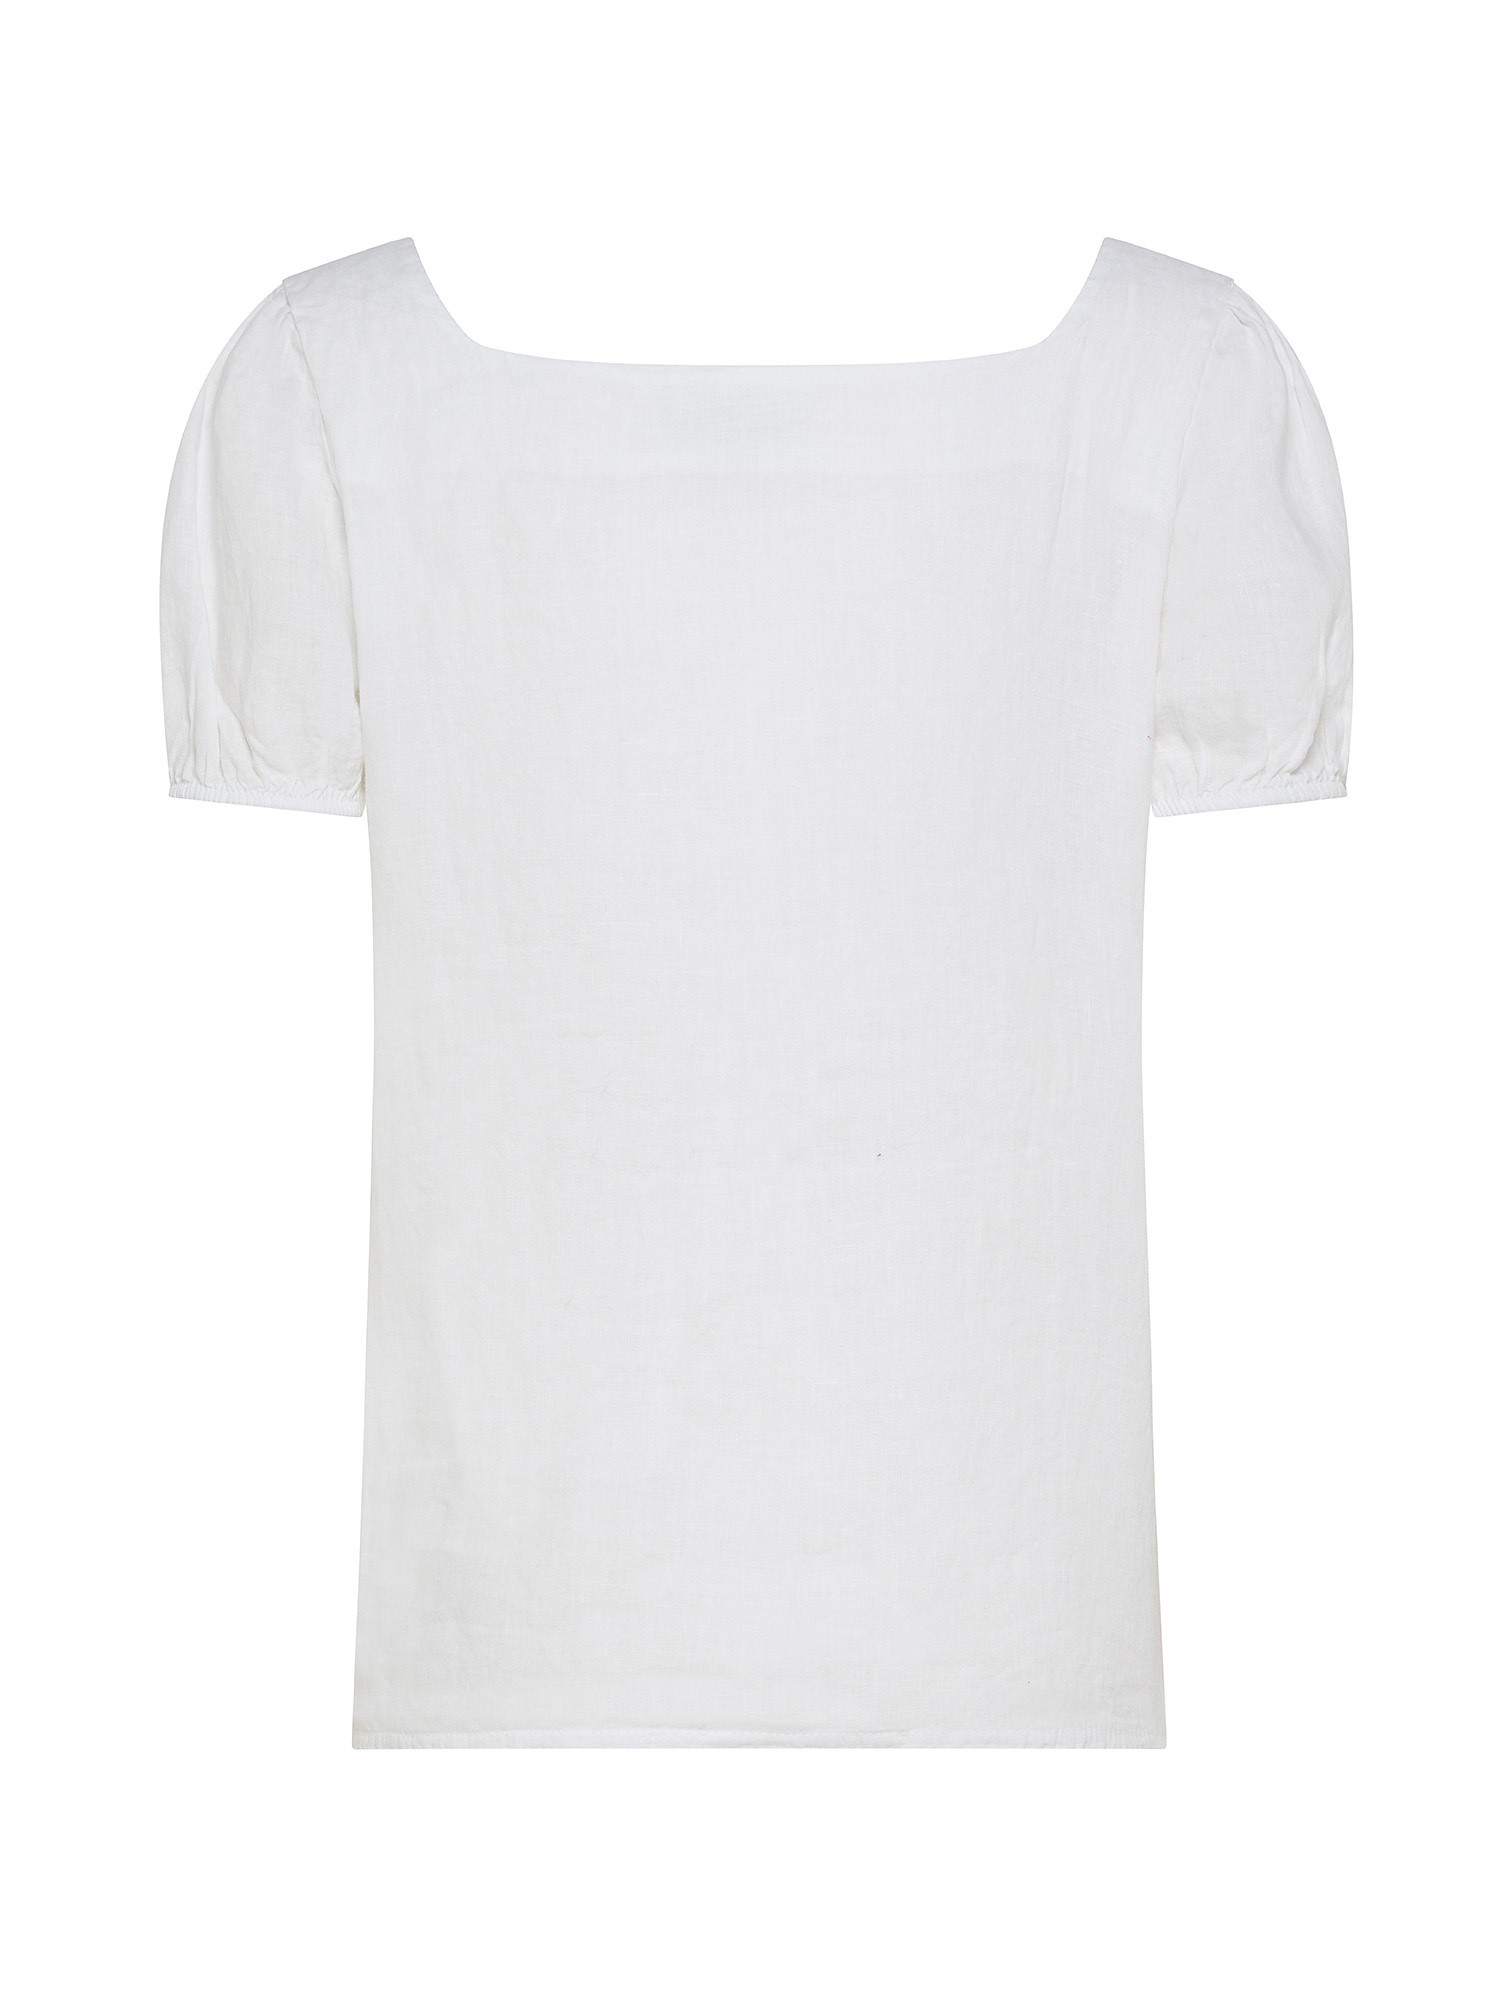 Koan - Linen blouse, White, large image number 1